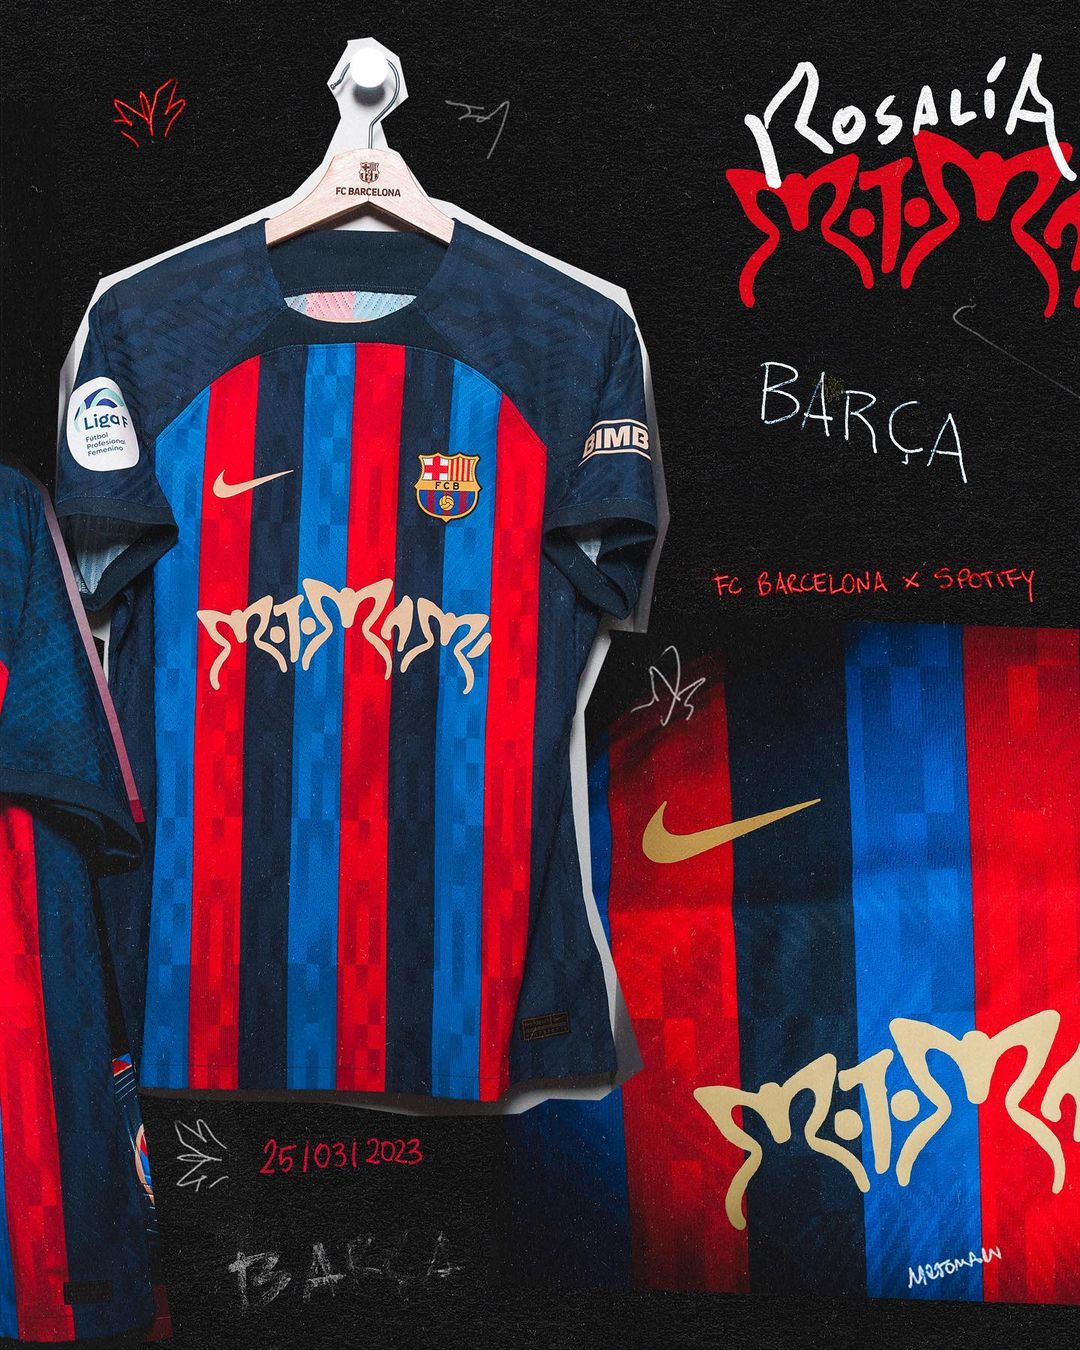 Rosalia logo op FC Barcelona voetbalshirt